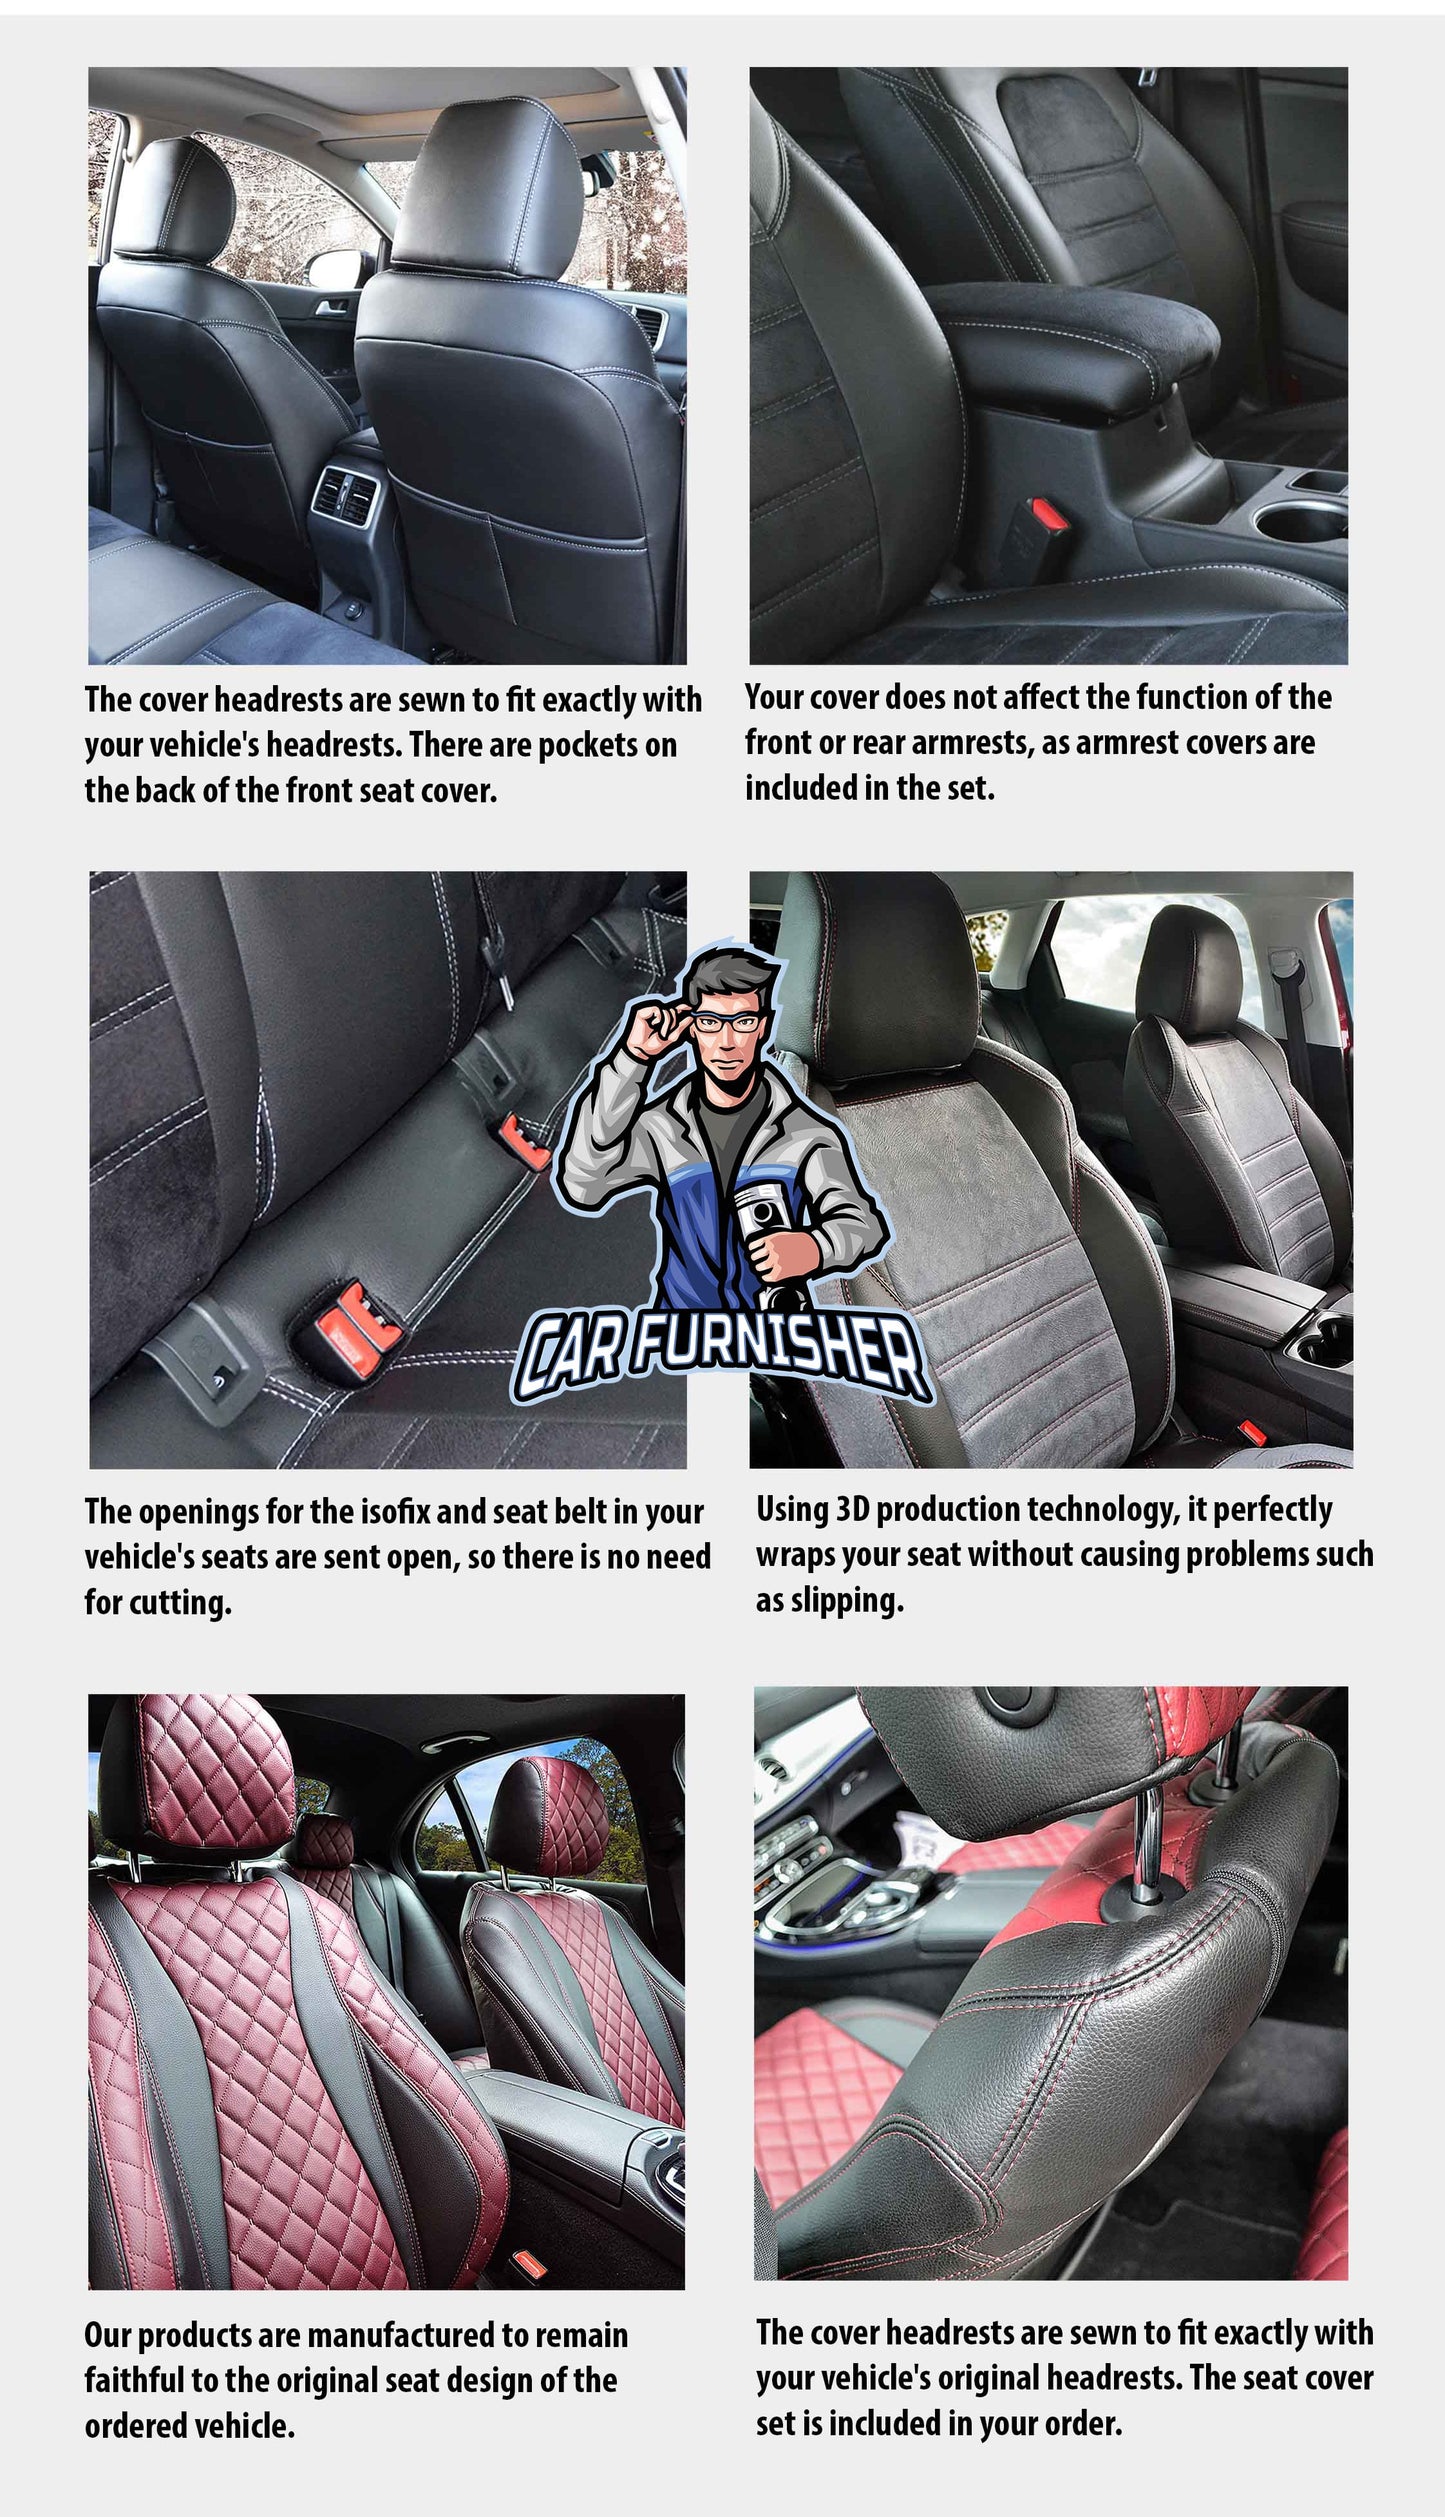 Suzuki S-Cross Car Seat Covers 2013-2018 Amsterdam Design Ivory Leather